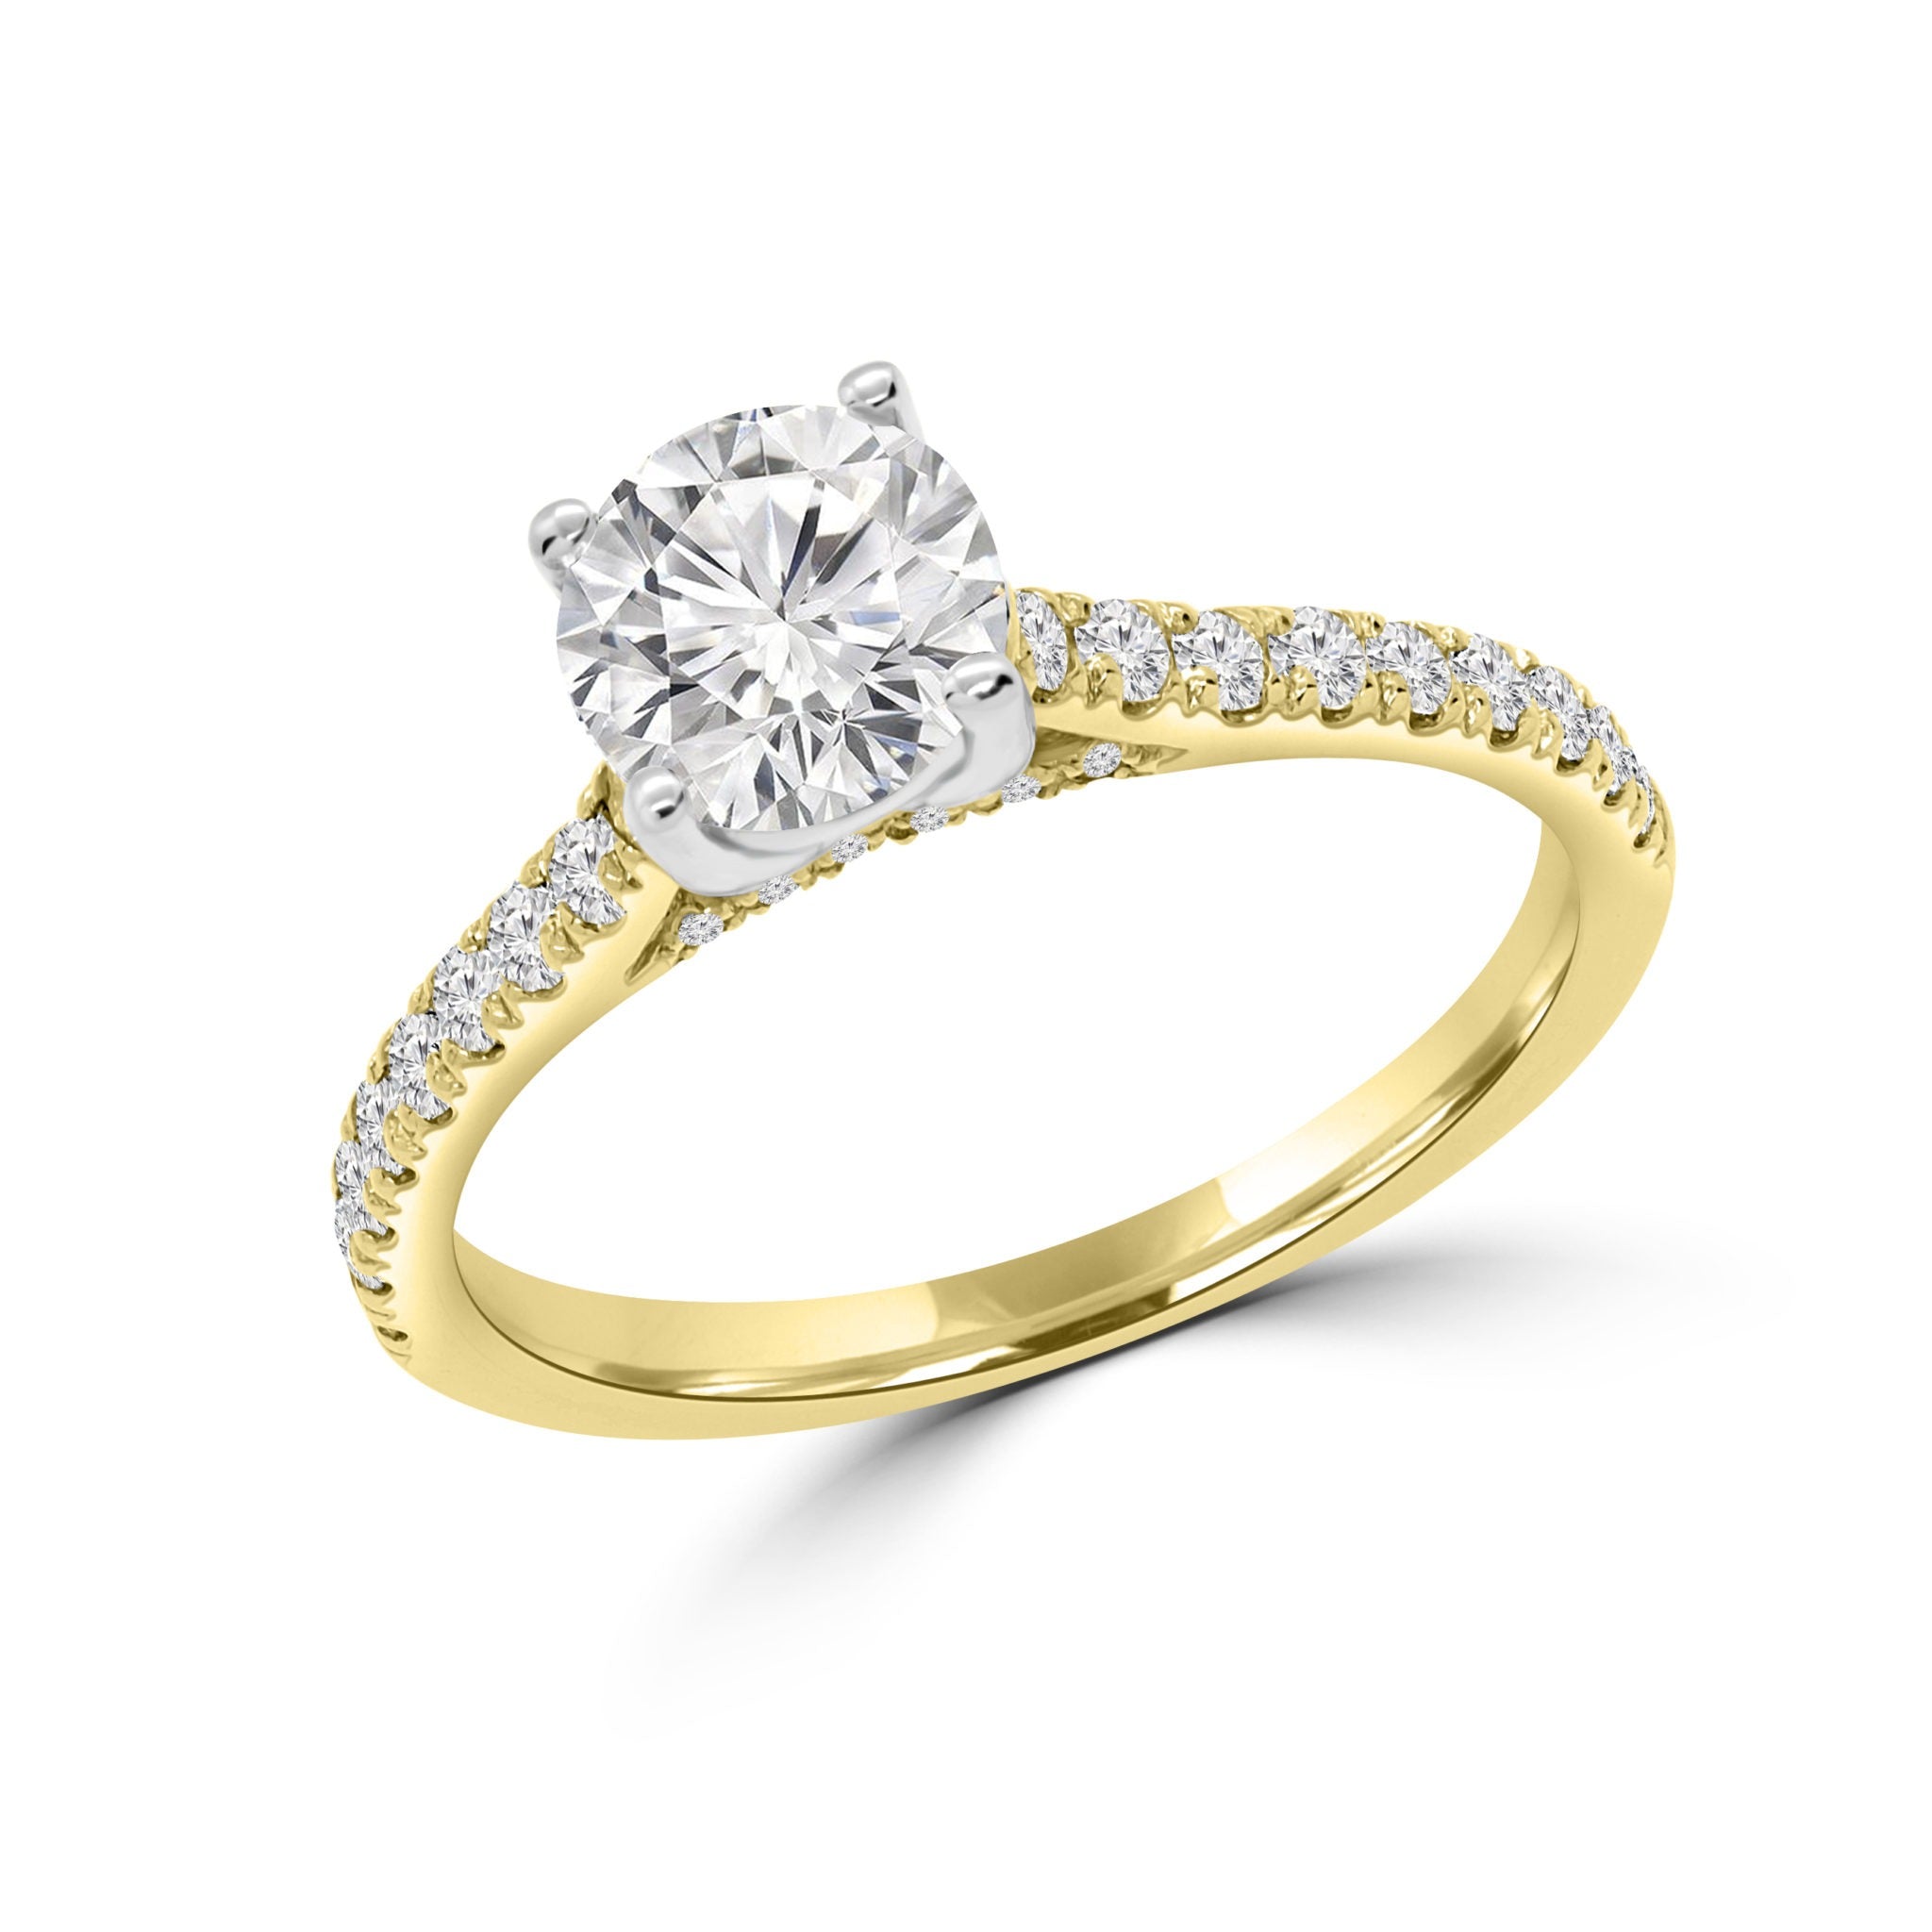 Flawless lab-grown diamond ring 1.67 (ctw) 14k yellow gold